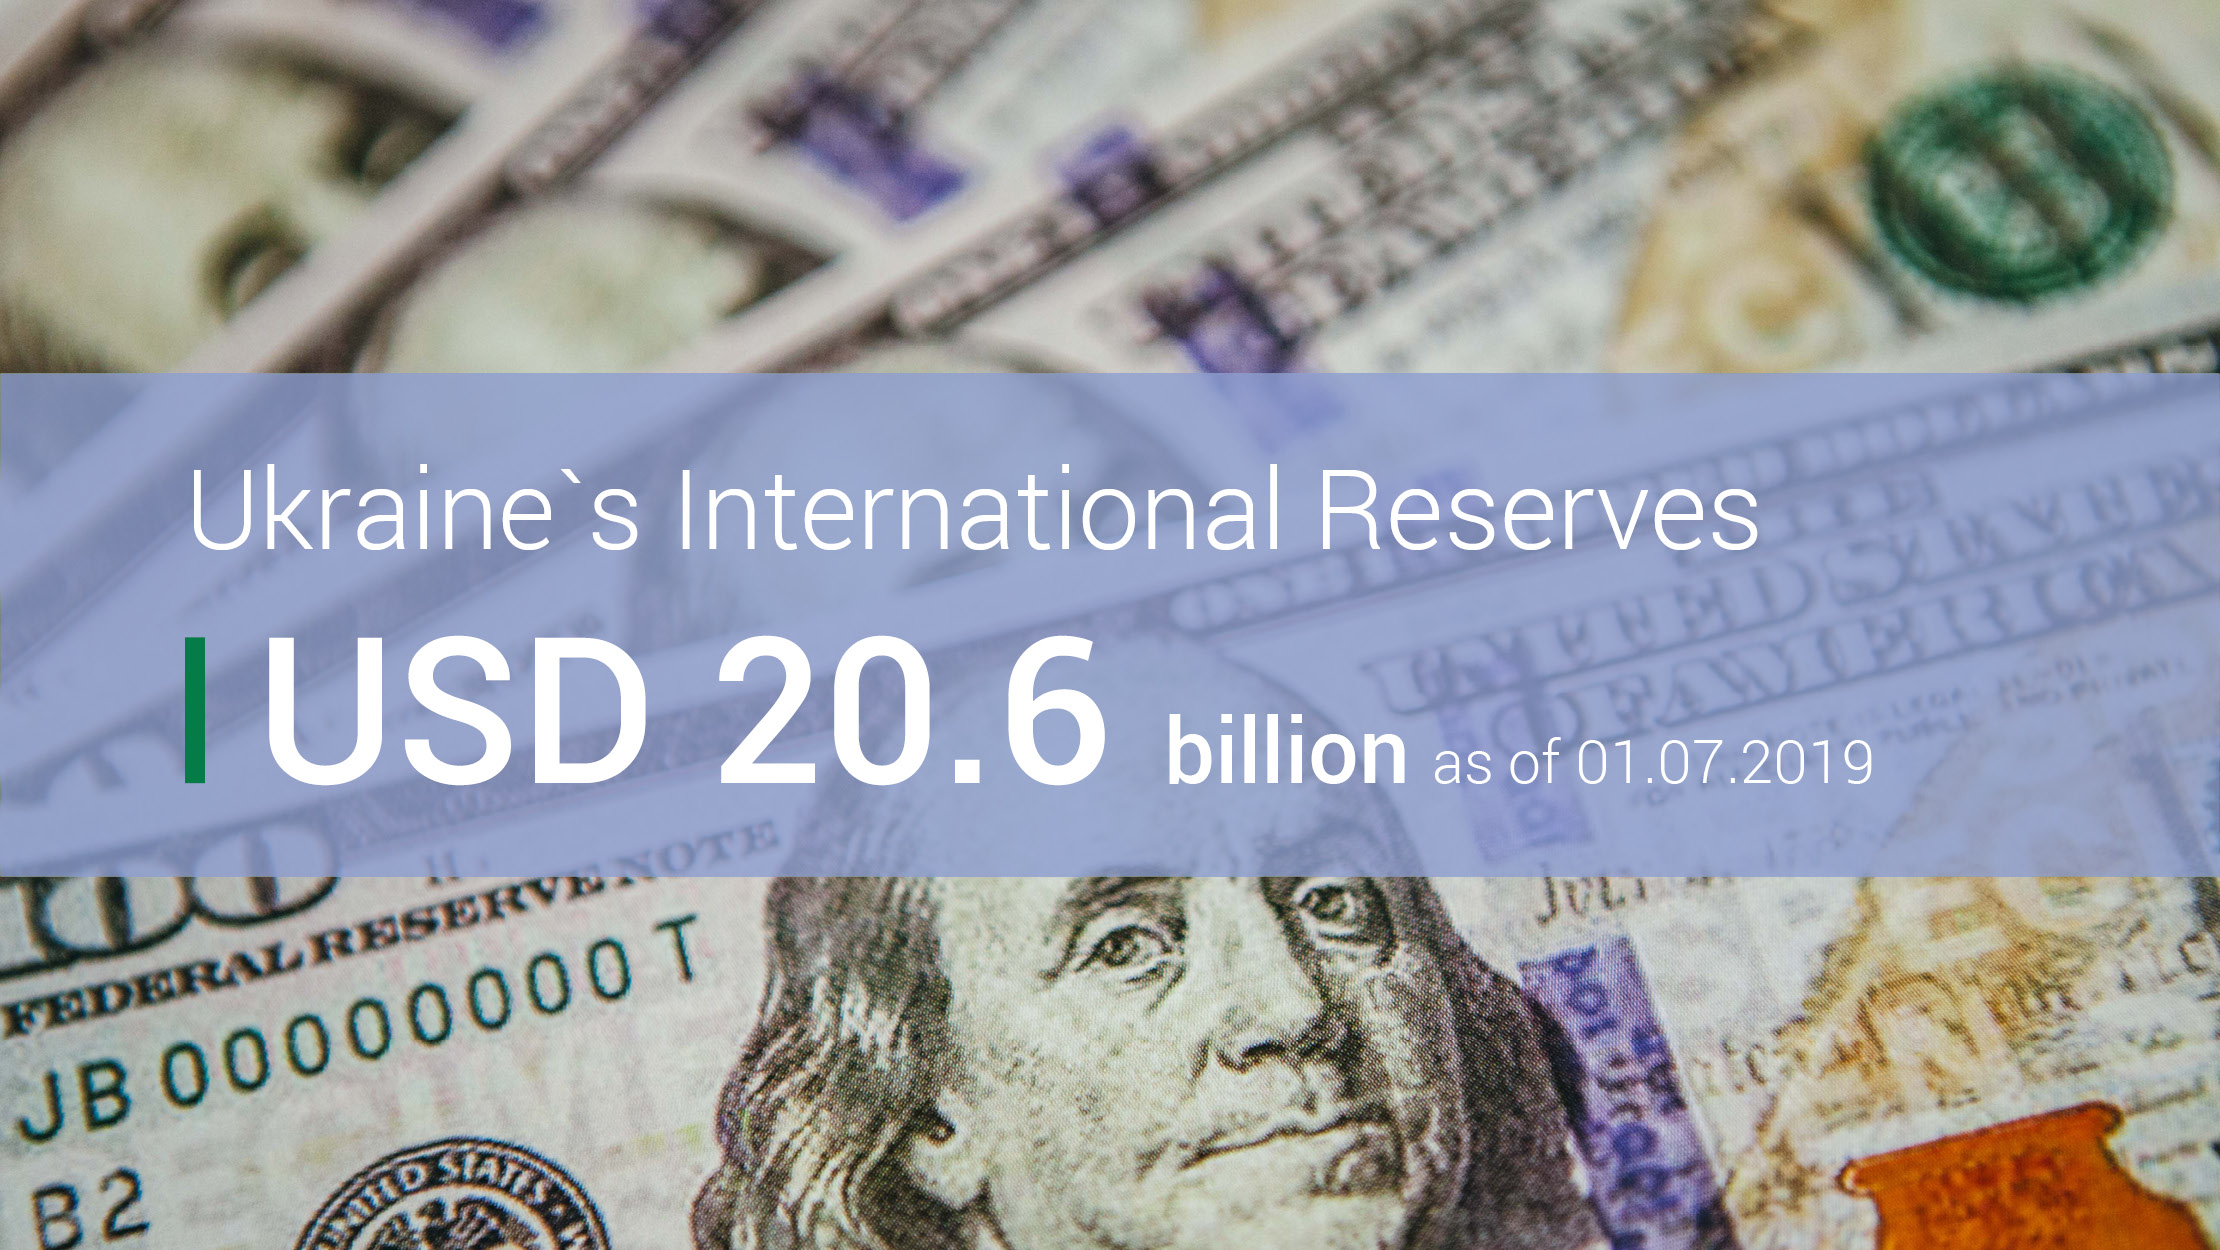 Ukraine’s International Reserves Increased by USD 1.2 Billion in June